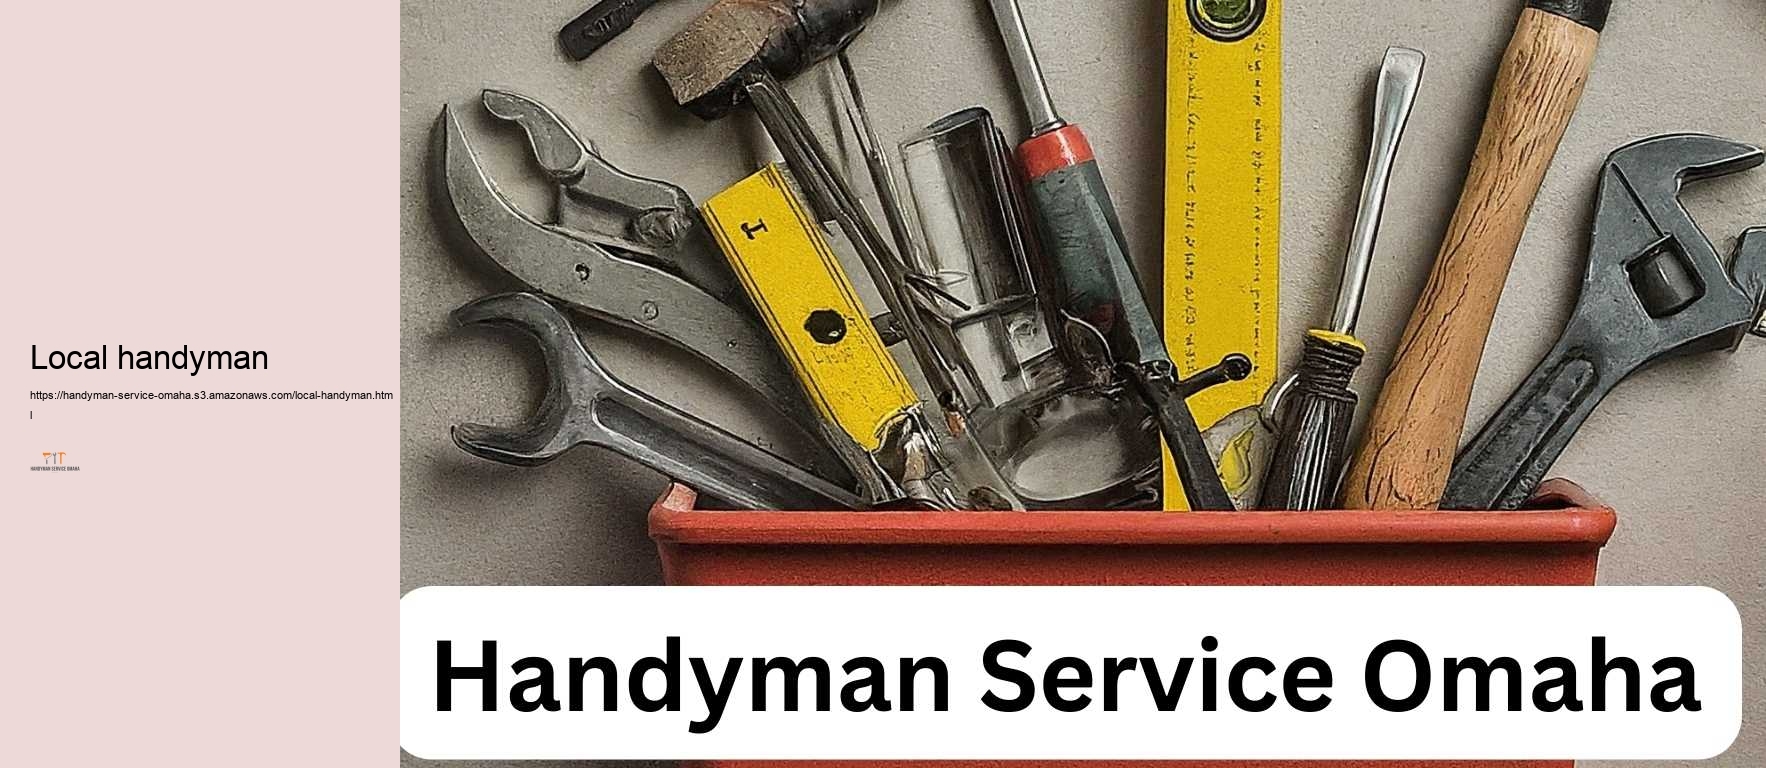 Local handyman